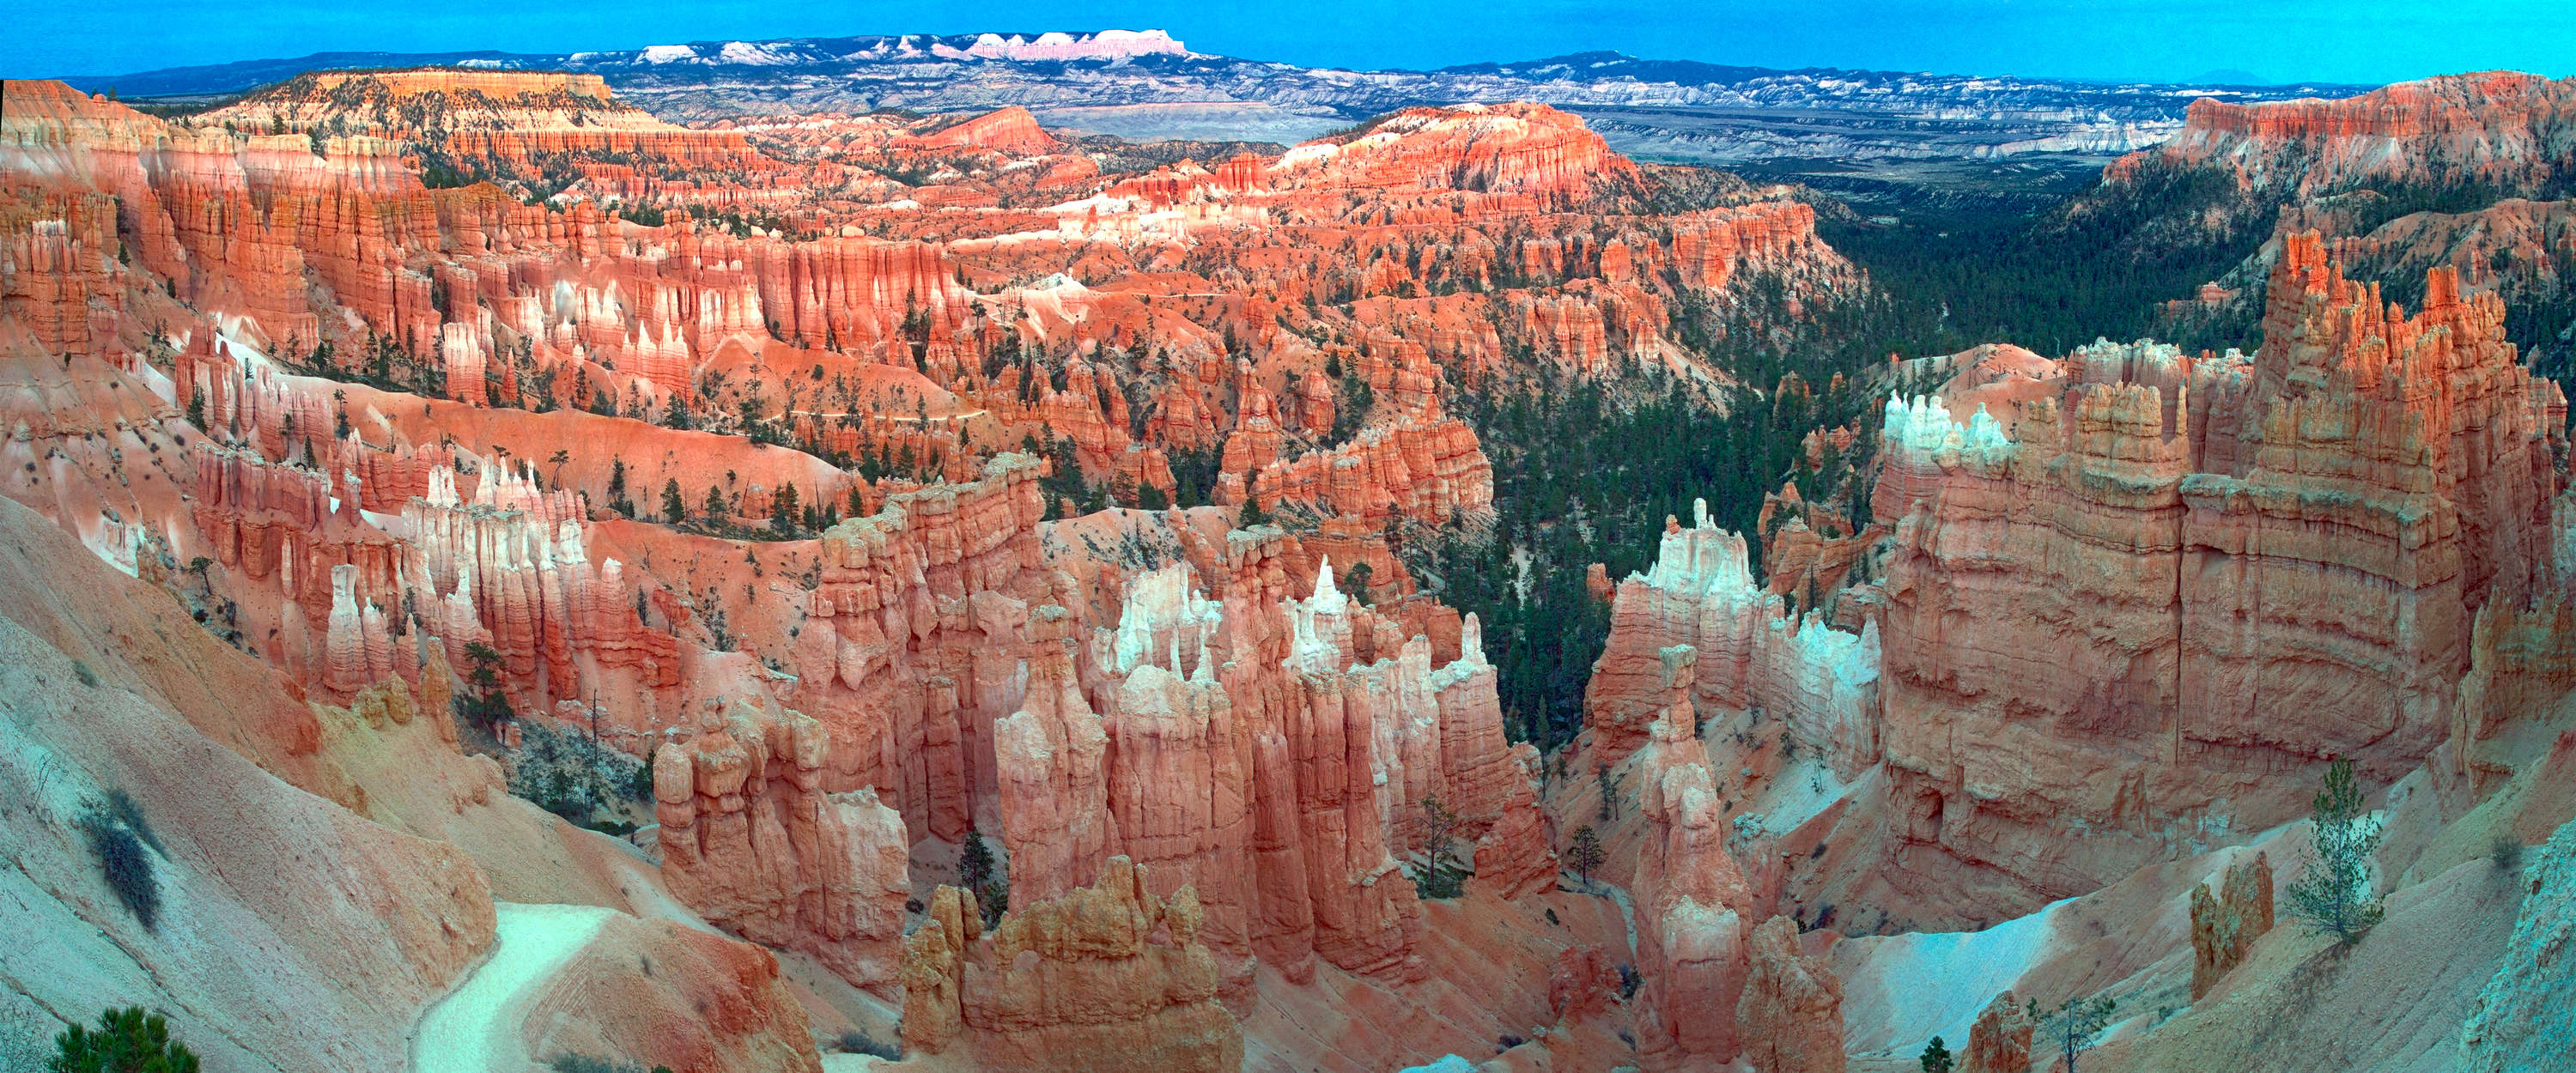             Fotomurali Canyon Panorama roccia rossa e bianca
        